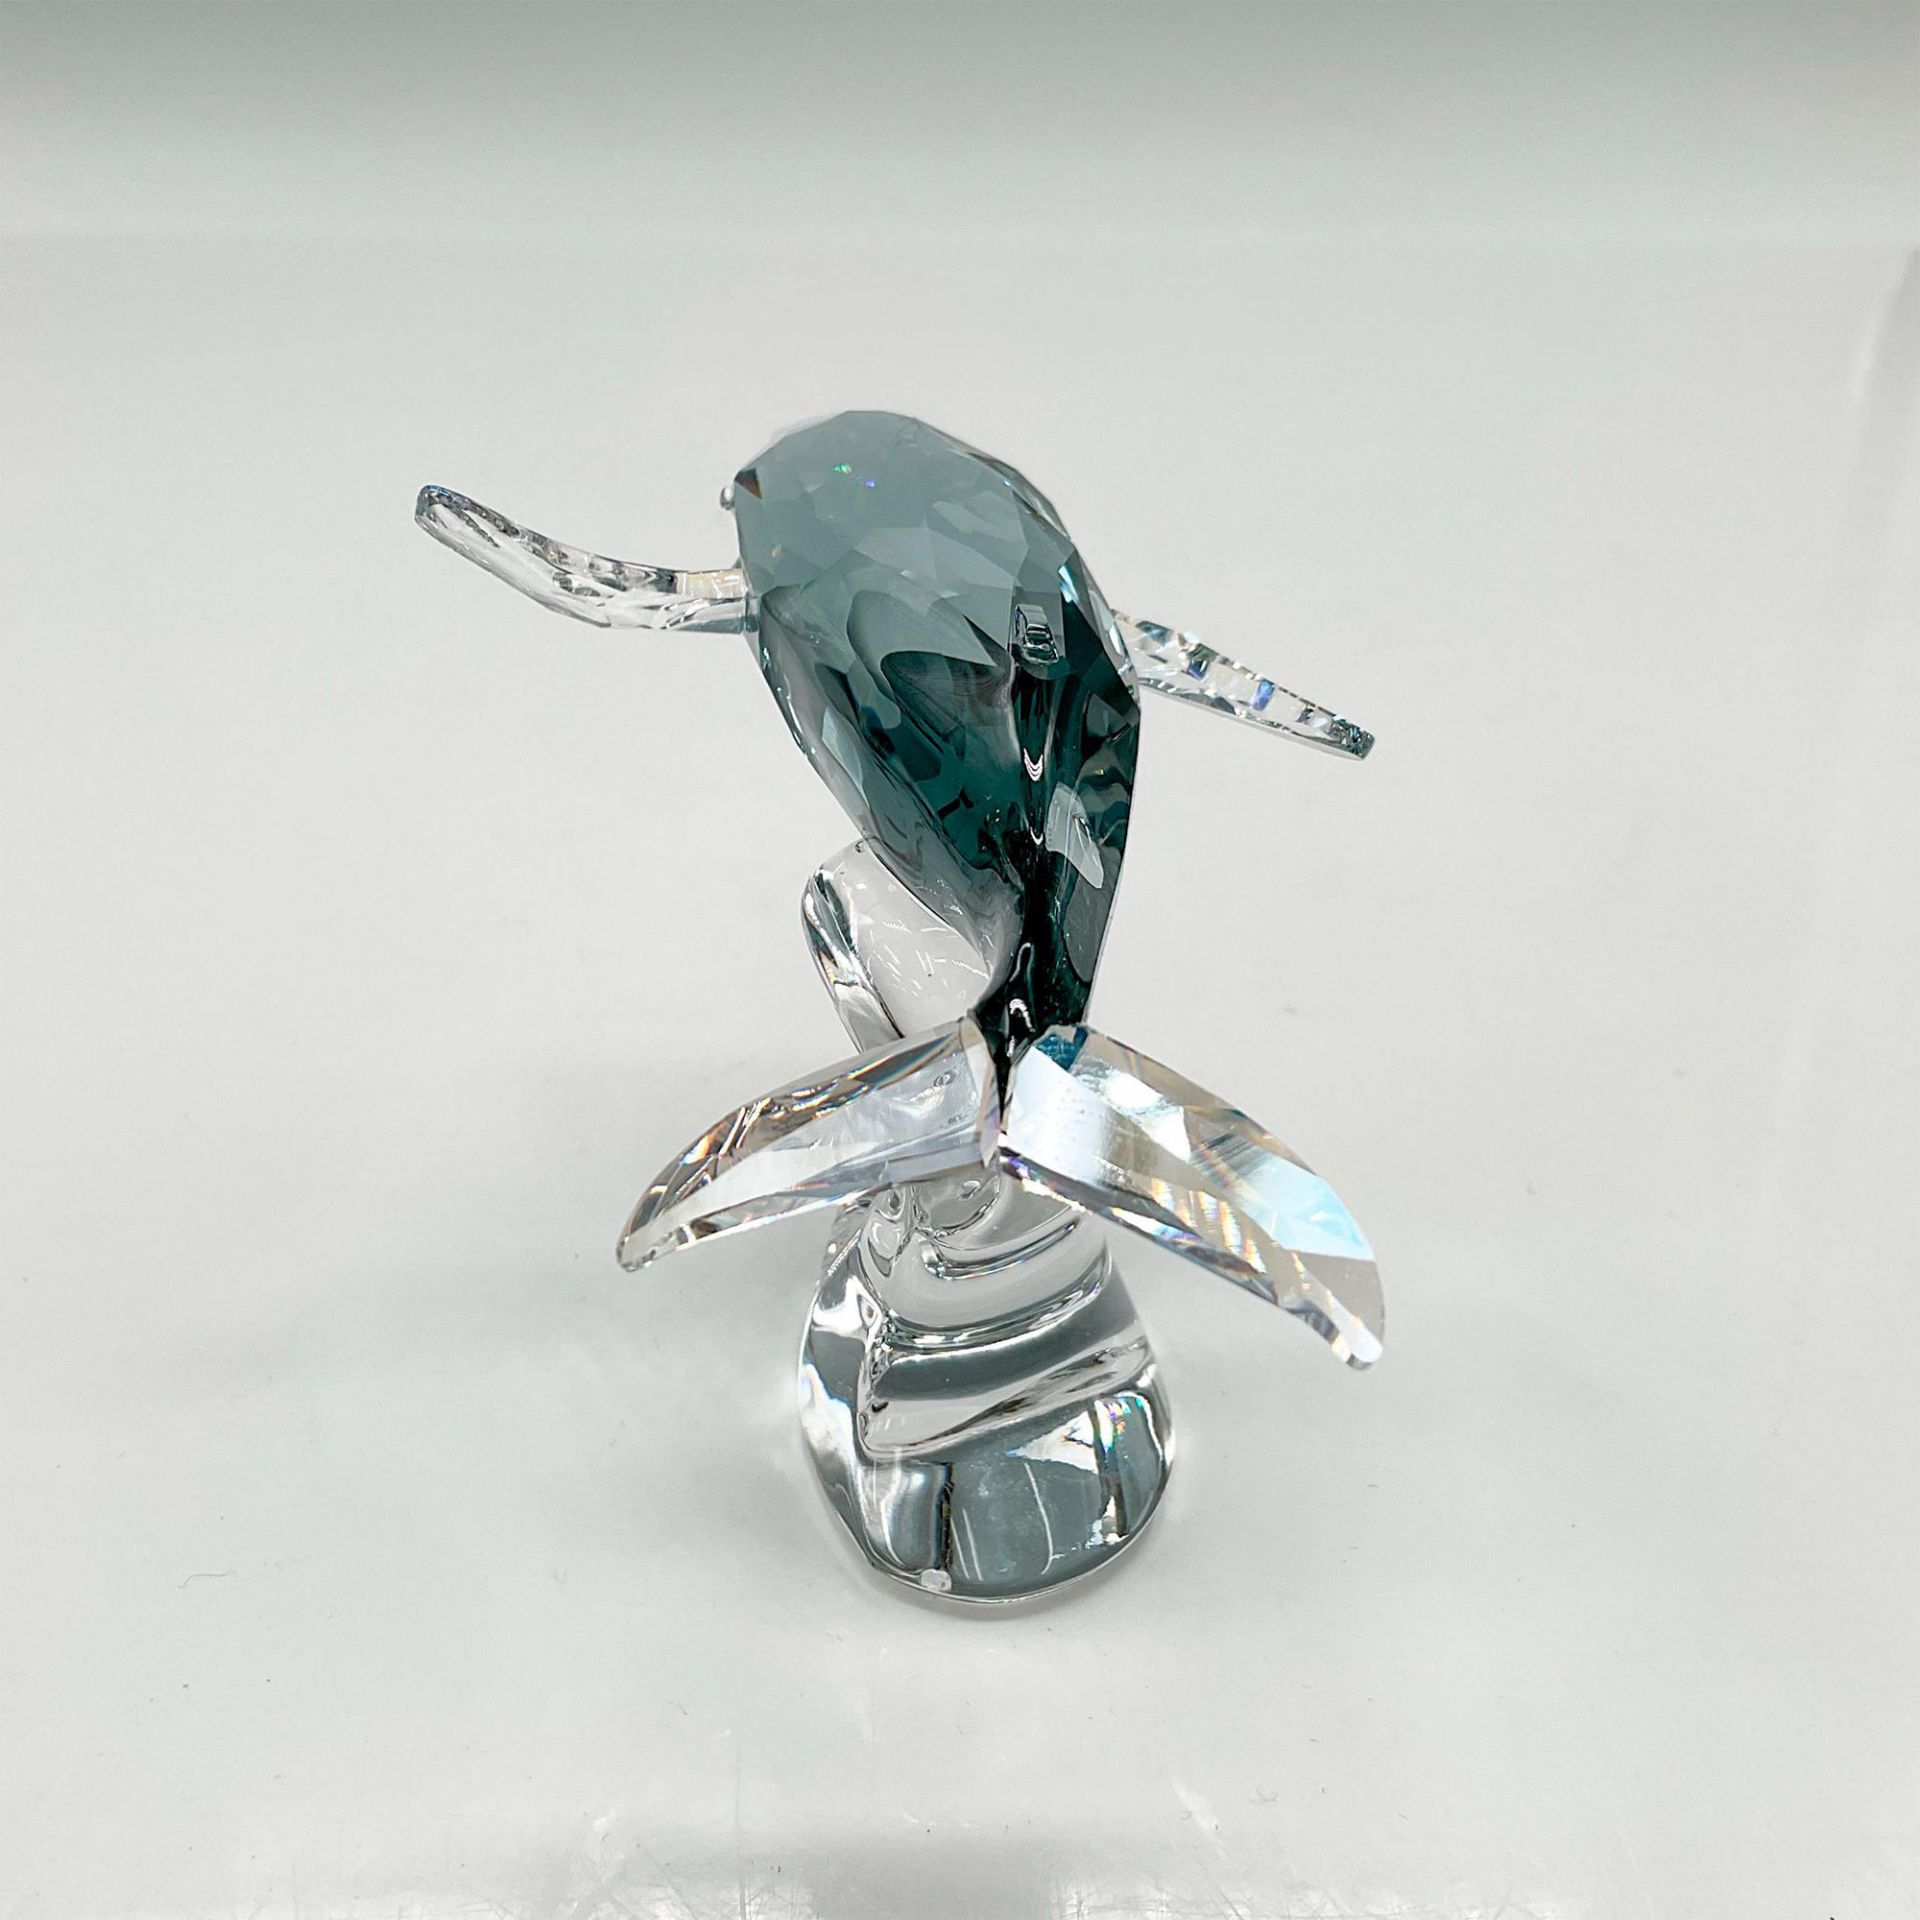 Swarovski Crystal Figurine, Young Humpback Whale - Image 2 of 4